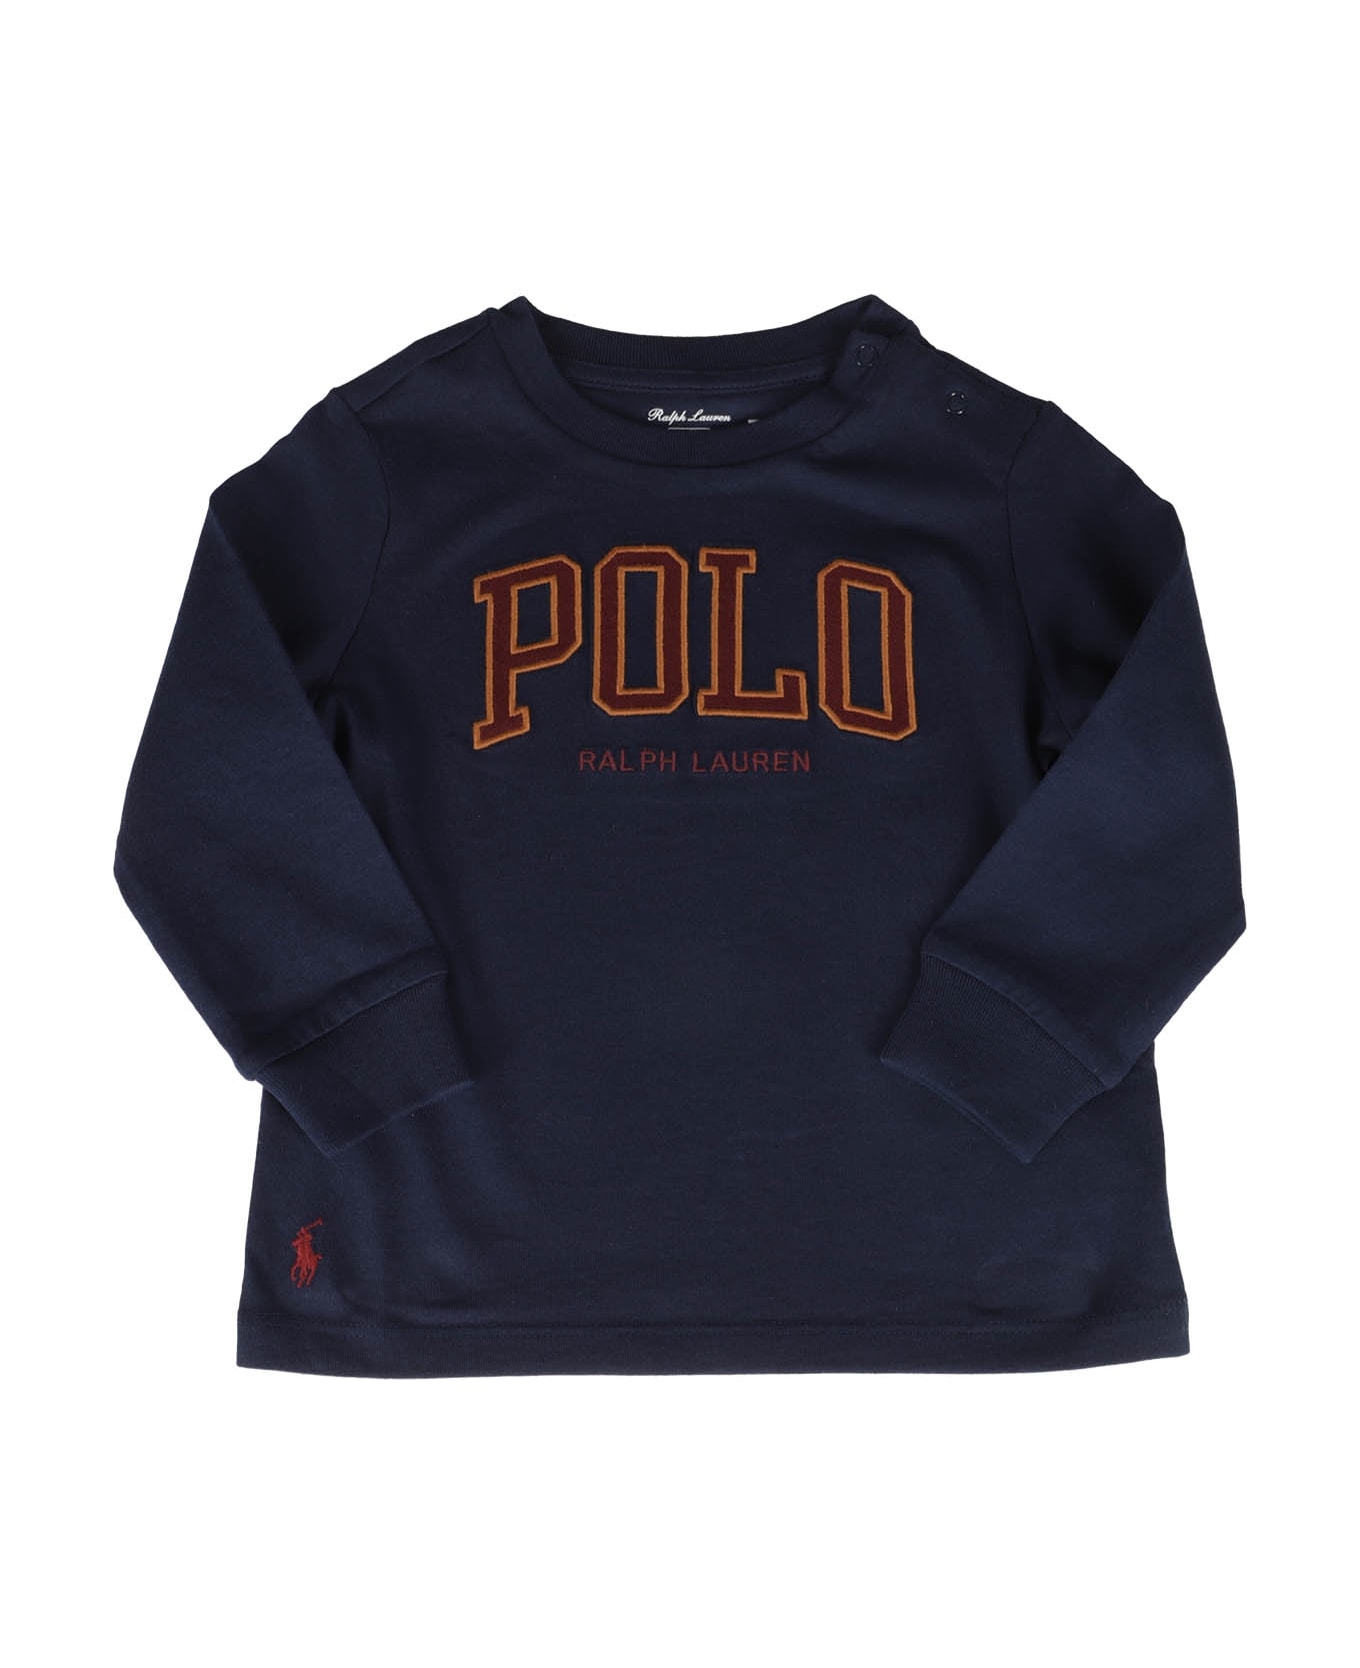 Polo Ralph Lauren Tshirt - Navy